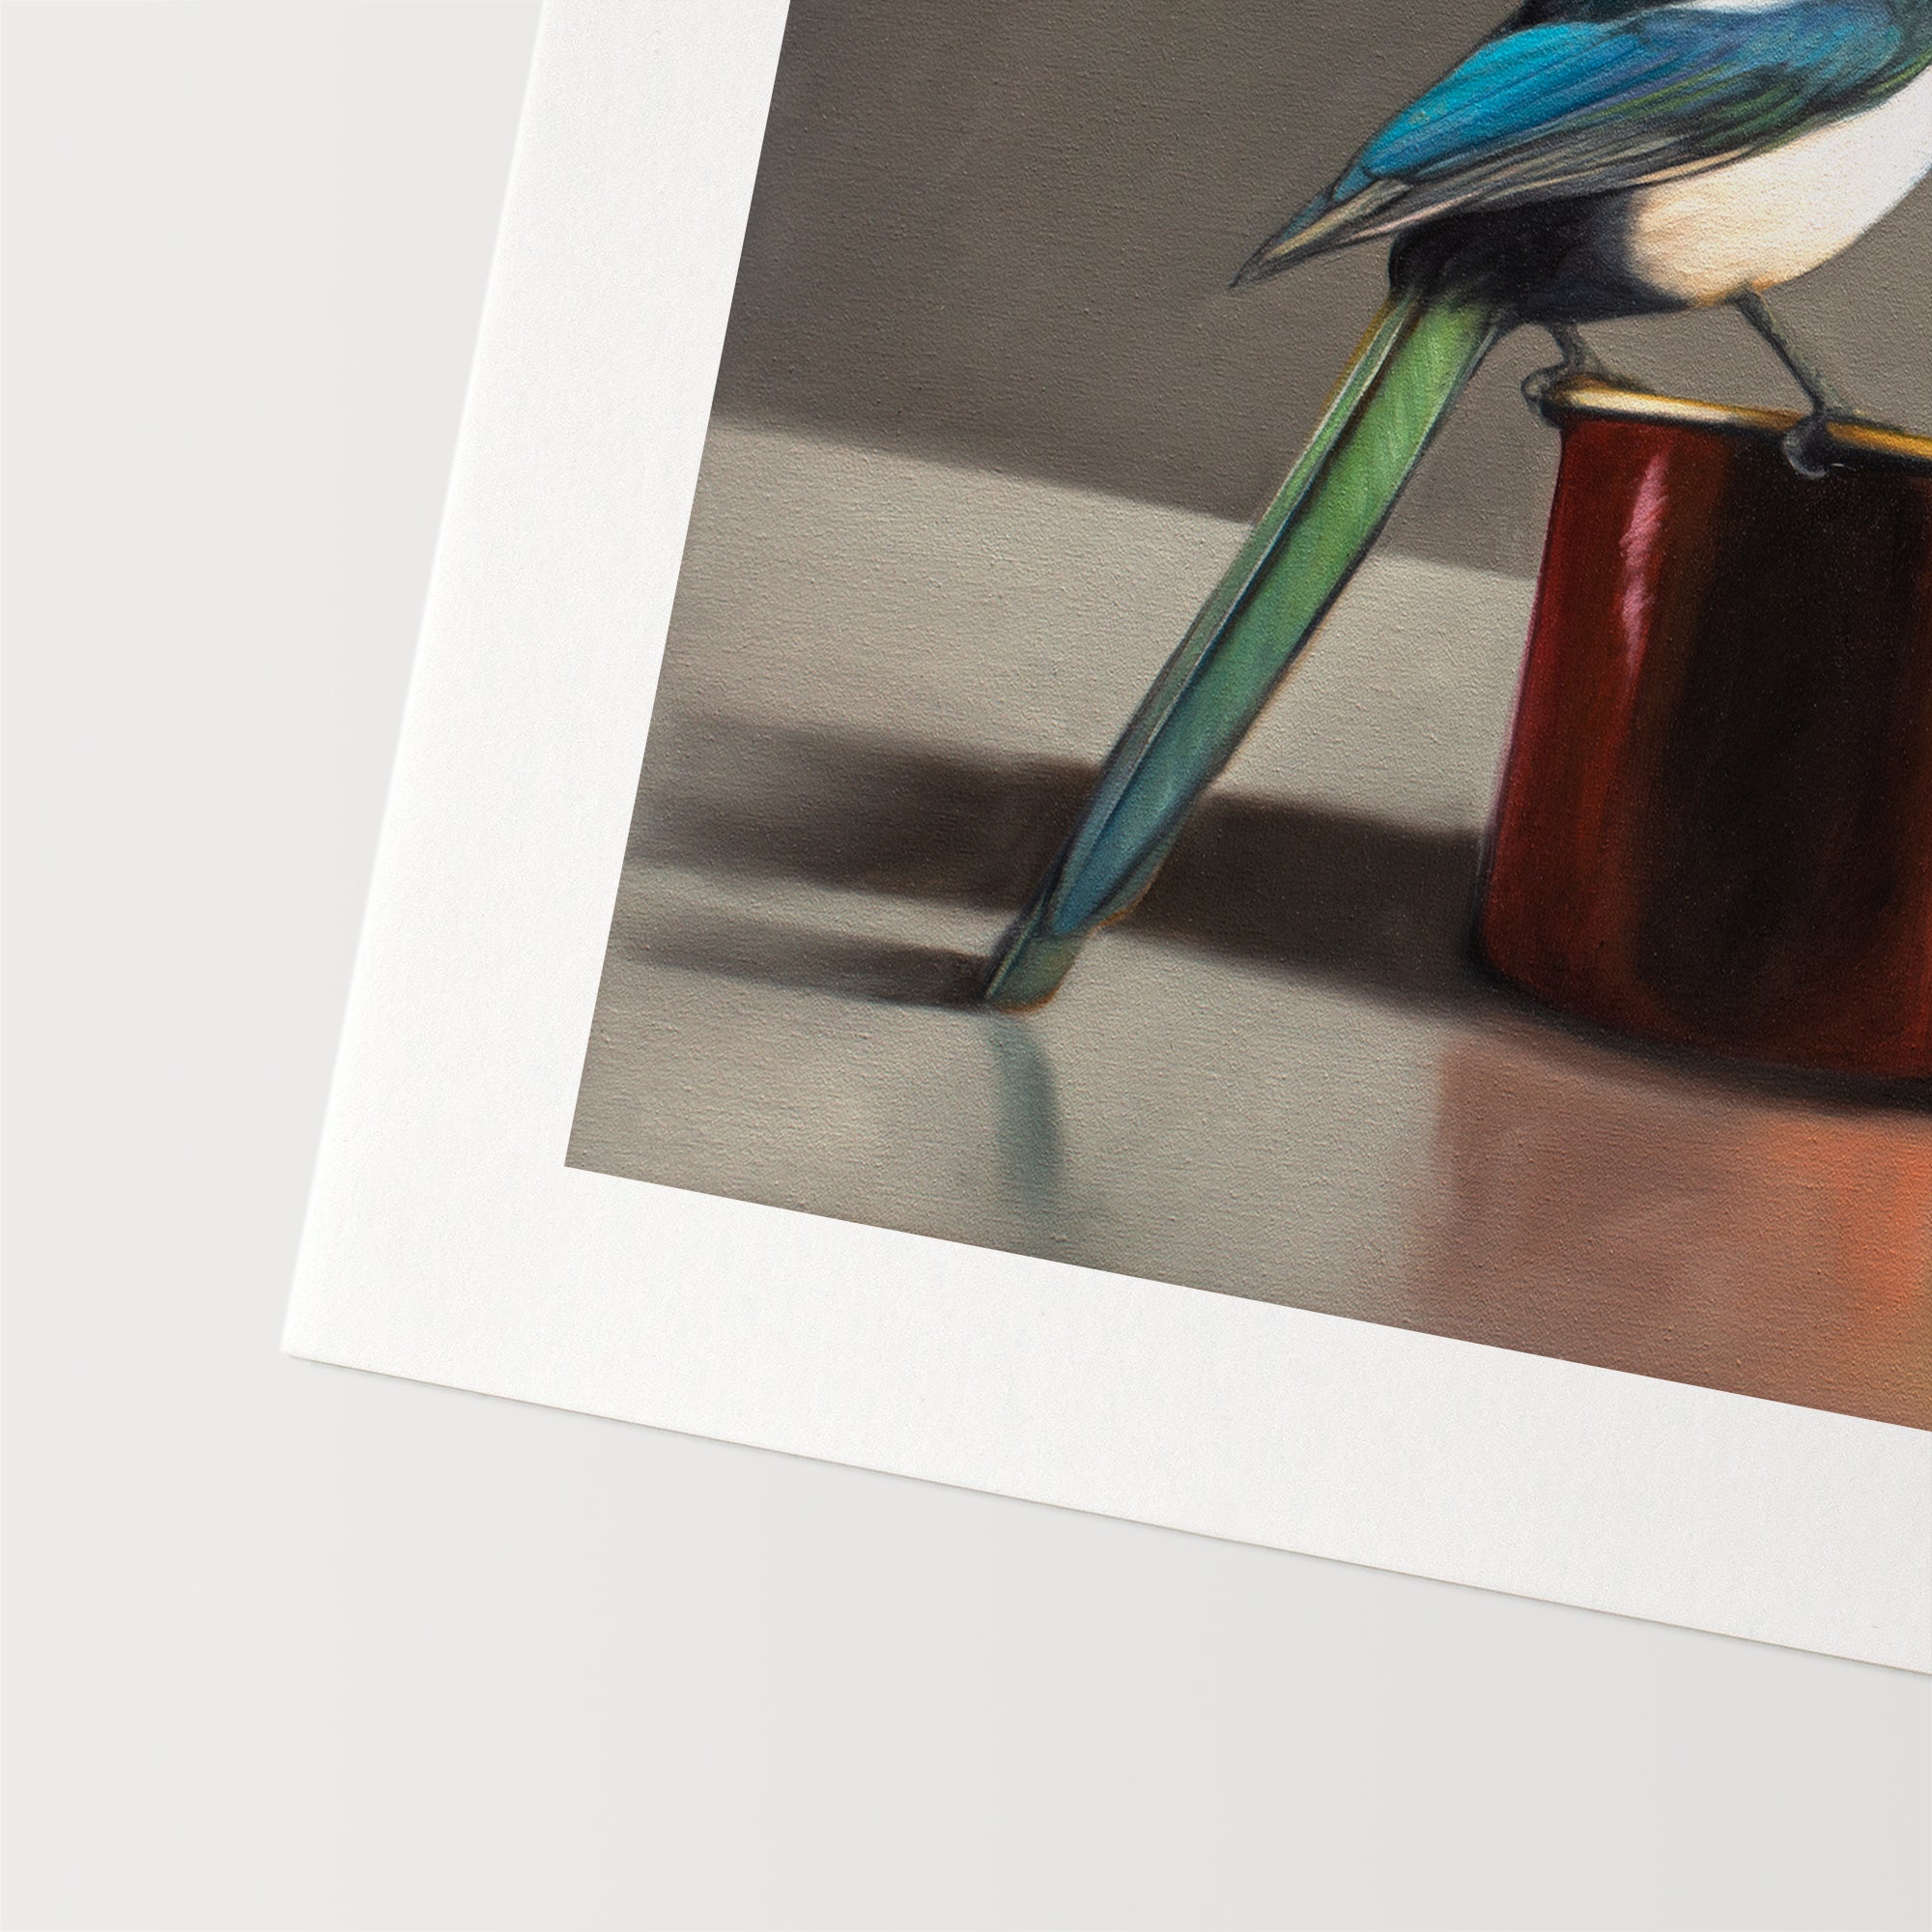 Blue Jay - Signed Fine Art Print